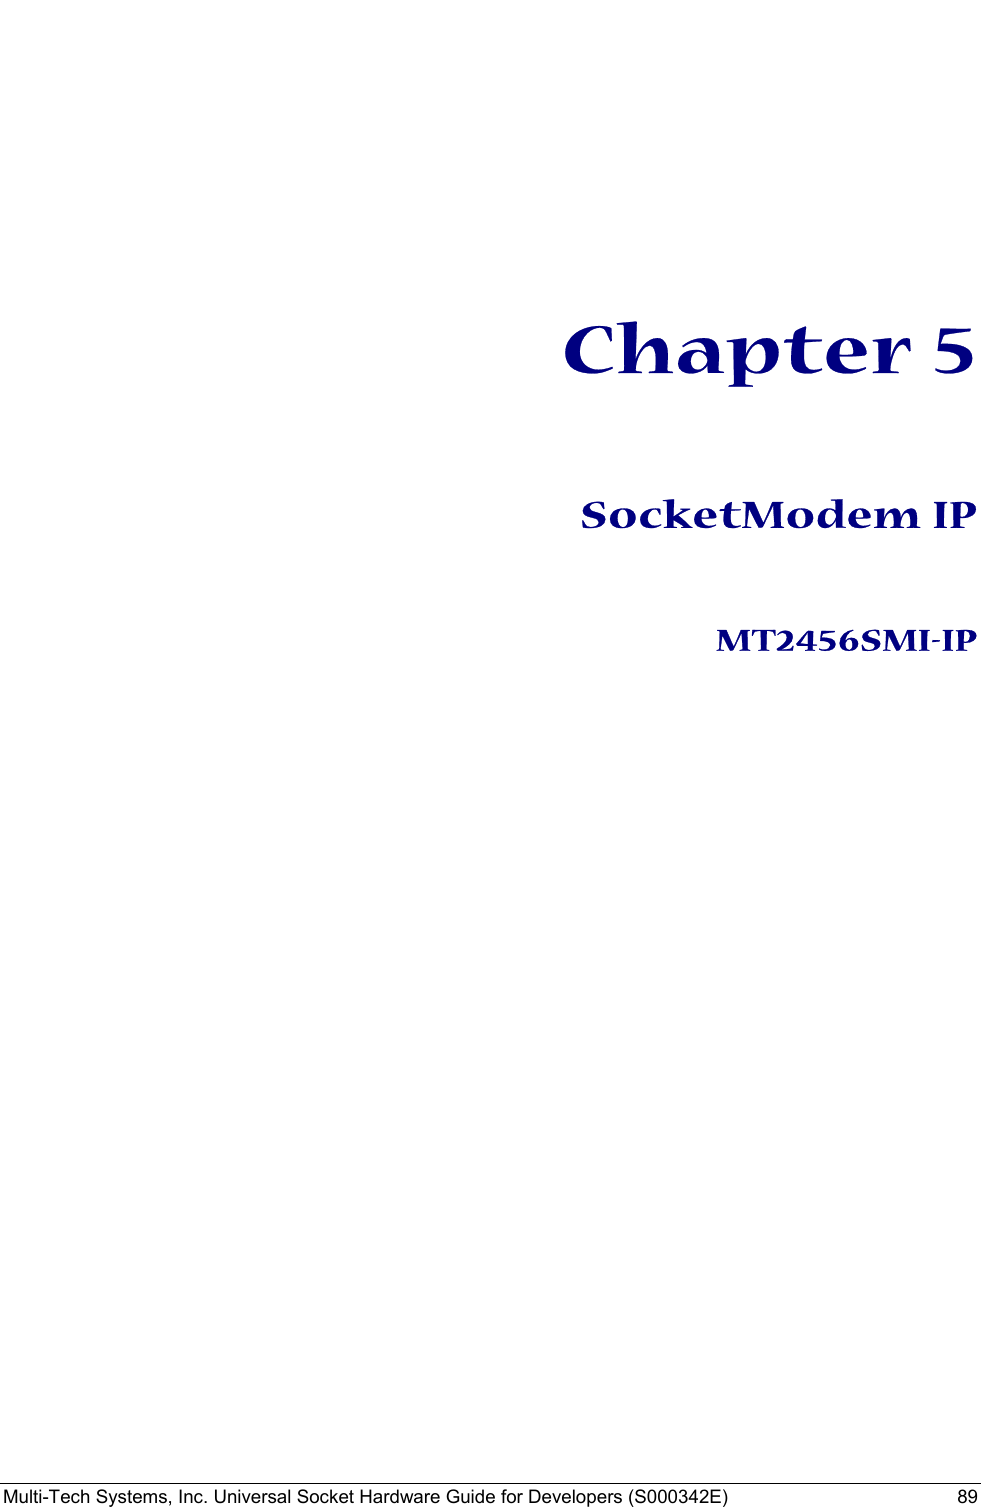  Multi-Tech Systems, Inc. Universal Socket Hardware Guide for Developers (S000342E)  89      Chapter 5   SocketModem IP   MT2456SMI-IP    